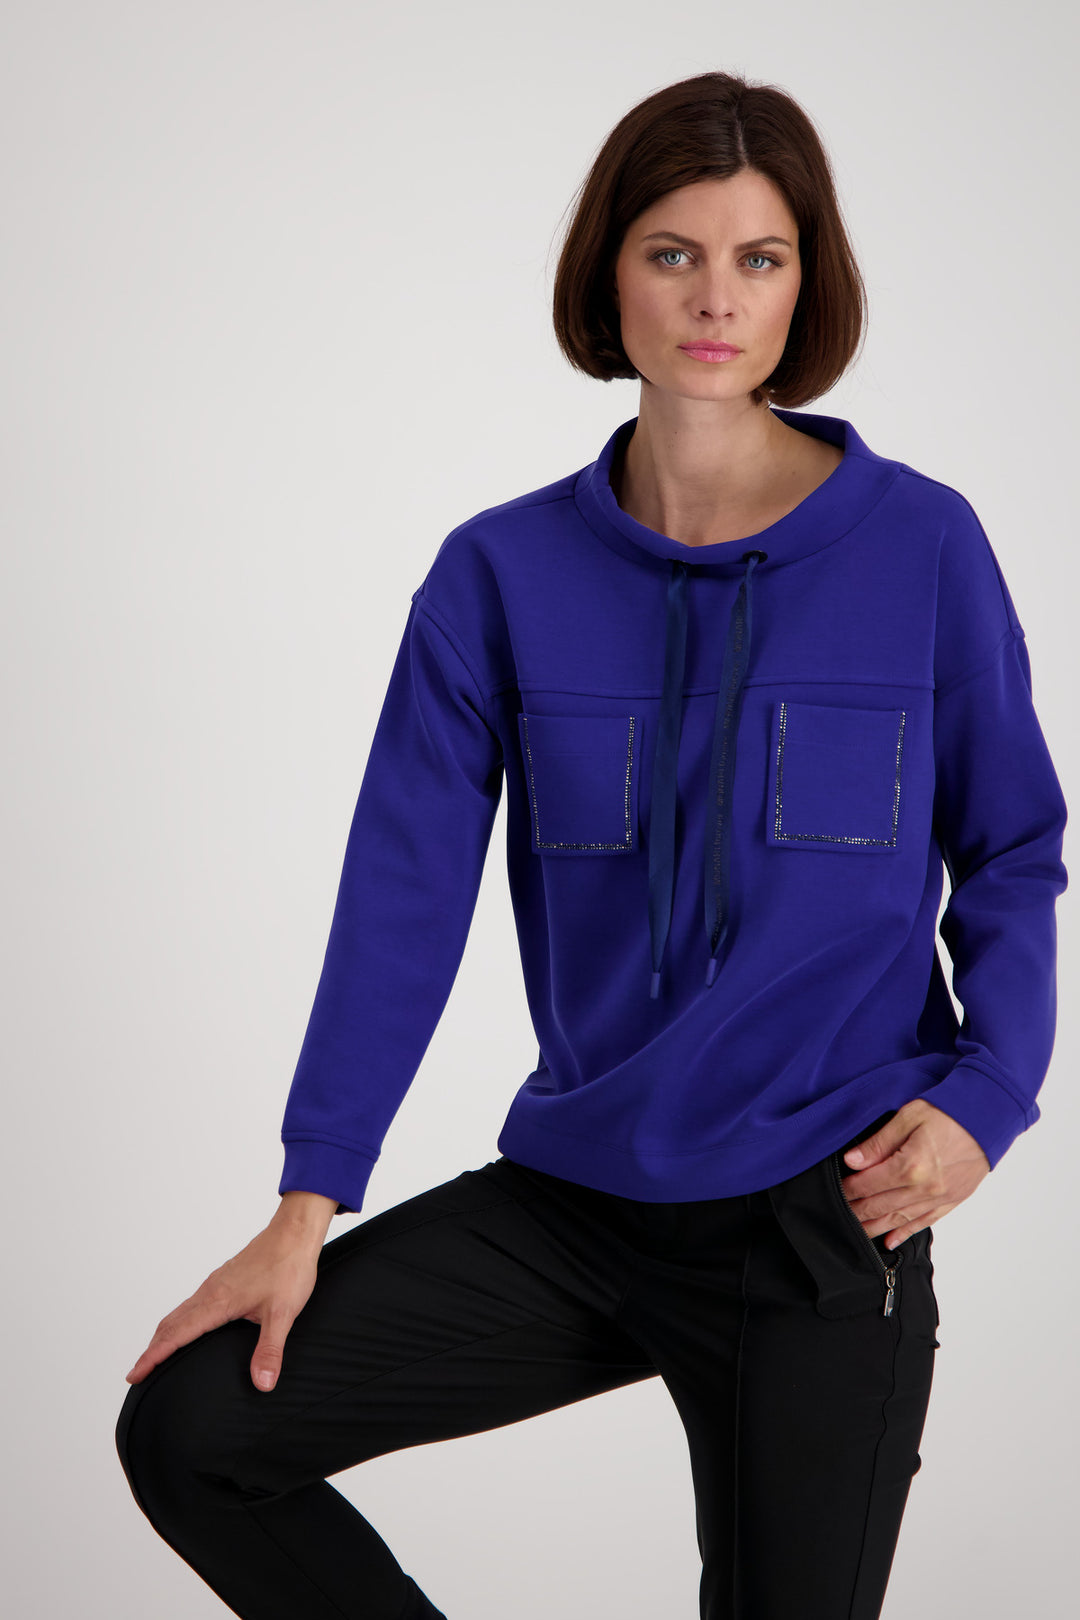 Monari 806748 Royal Blue Stand Up Collar Sweatshirt Front | Dotique